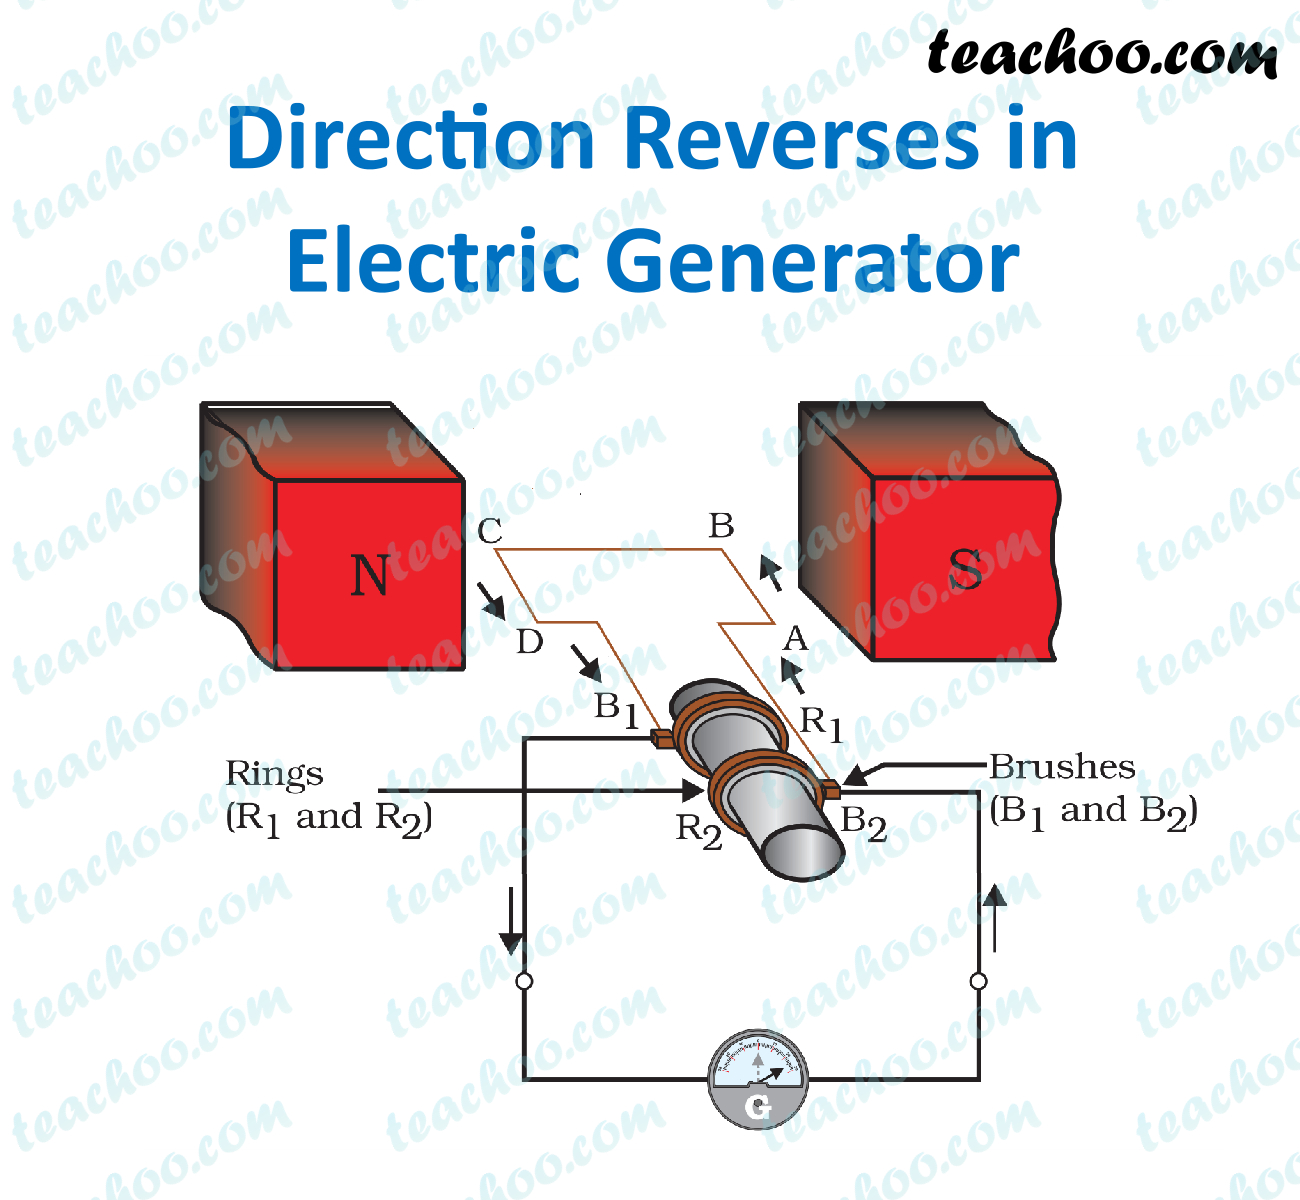 Electric Generator Class 10 - Working, Principle, Diagram - Teachoo